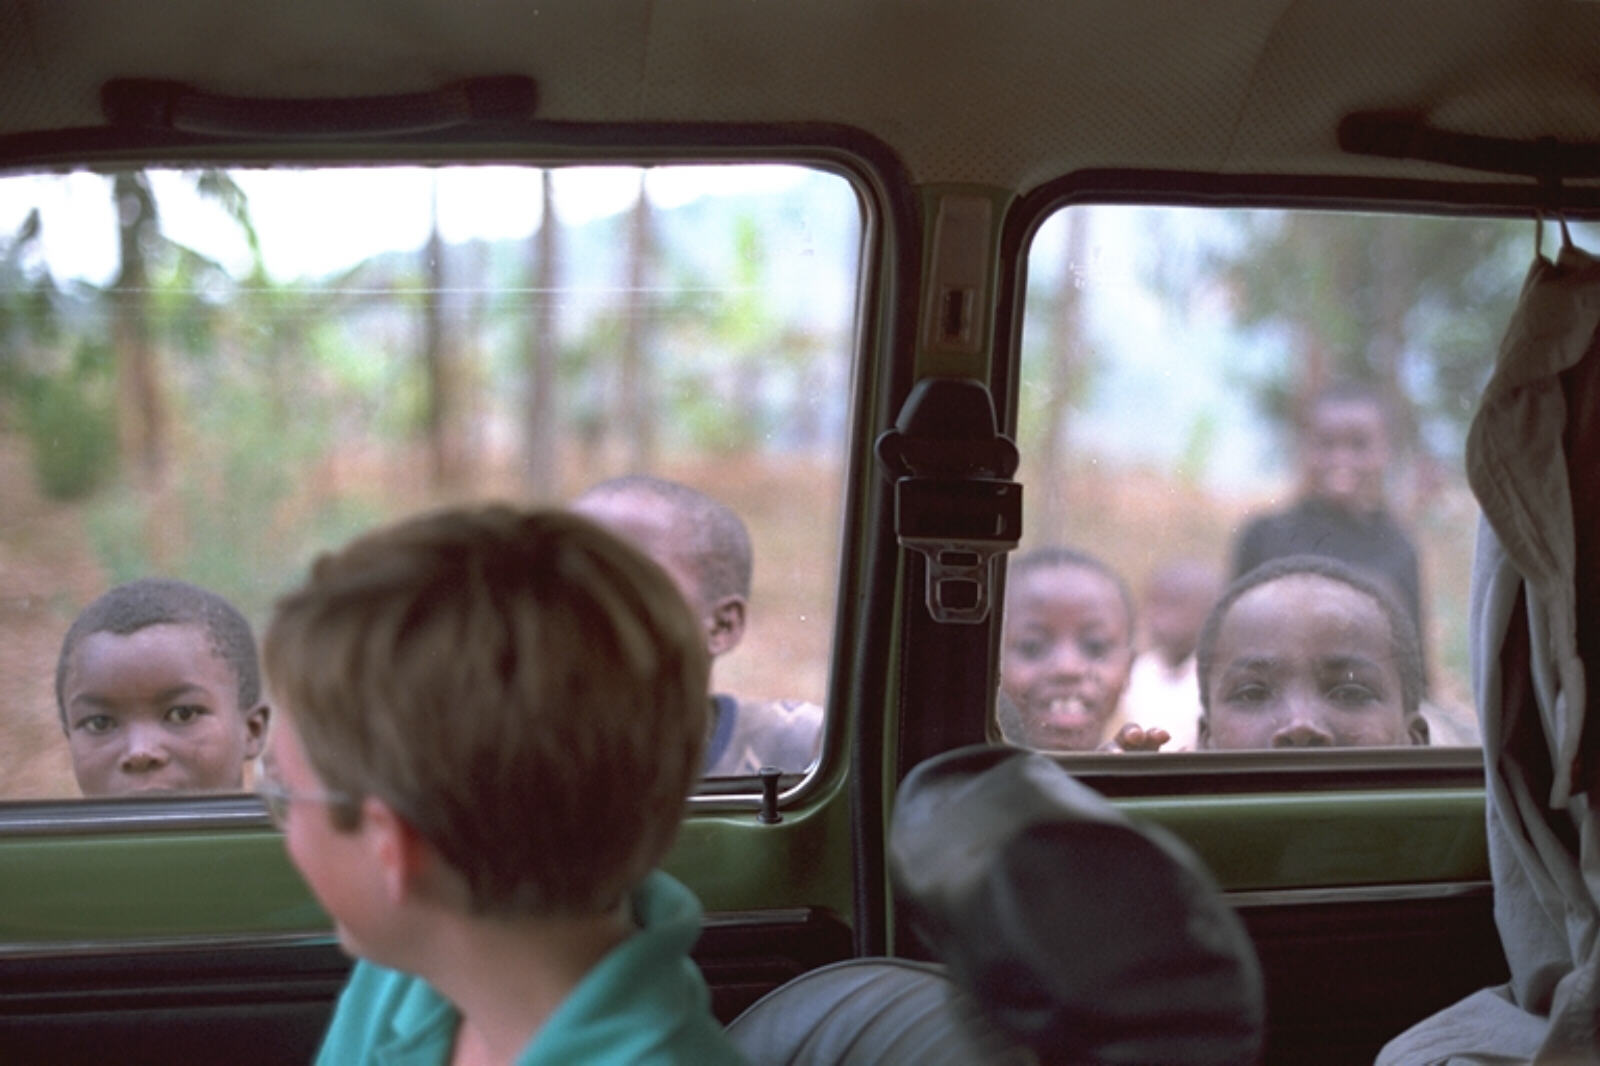 An audience at a roadside stop in Rwanda